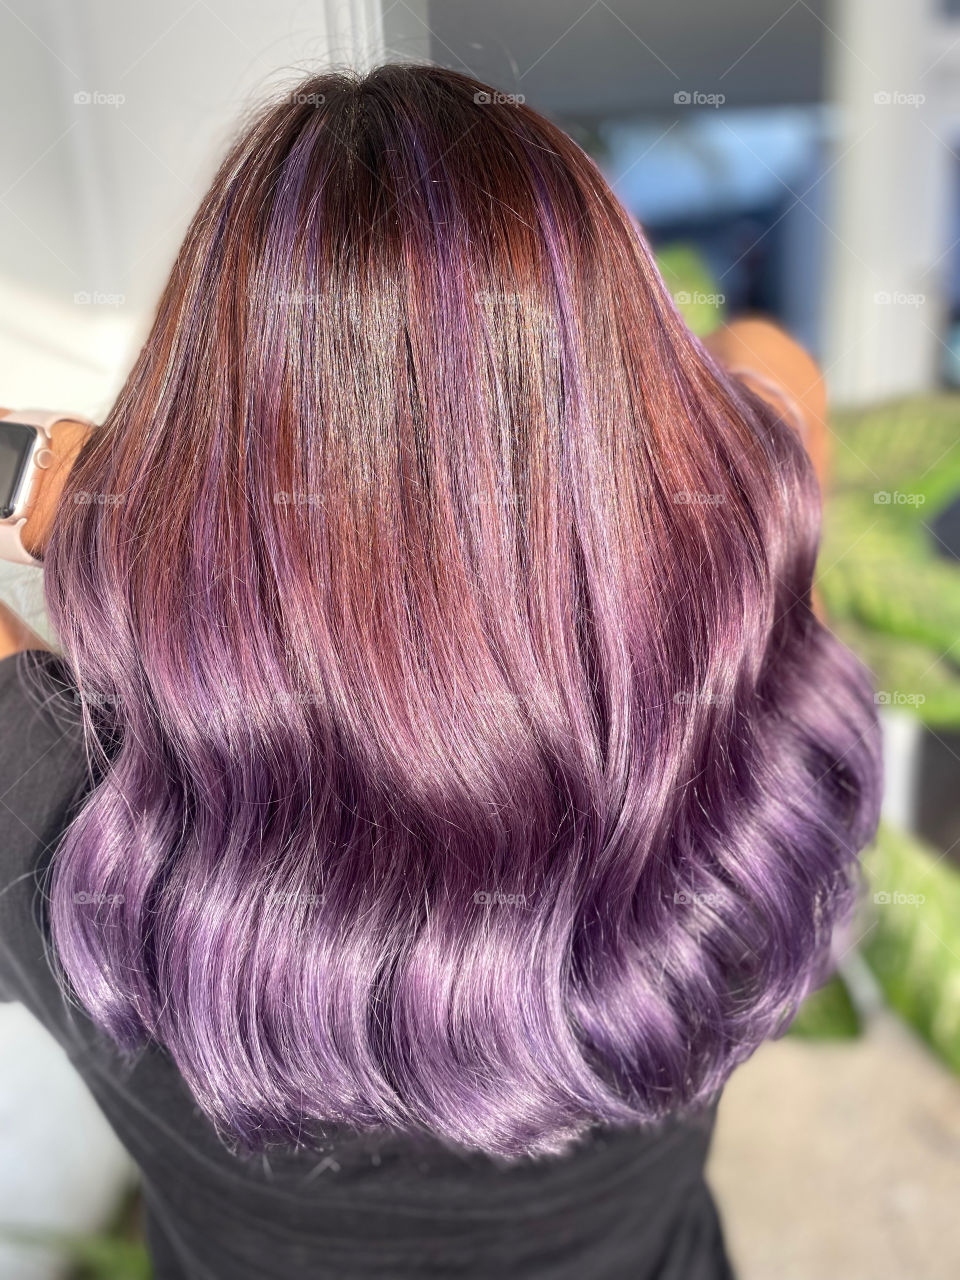 Purple hair style 